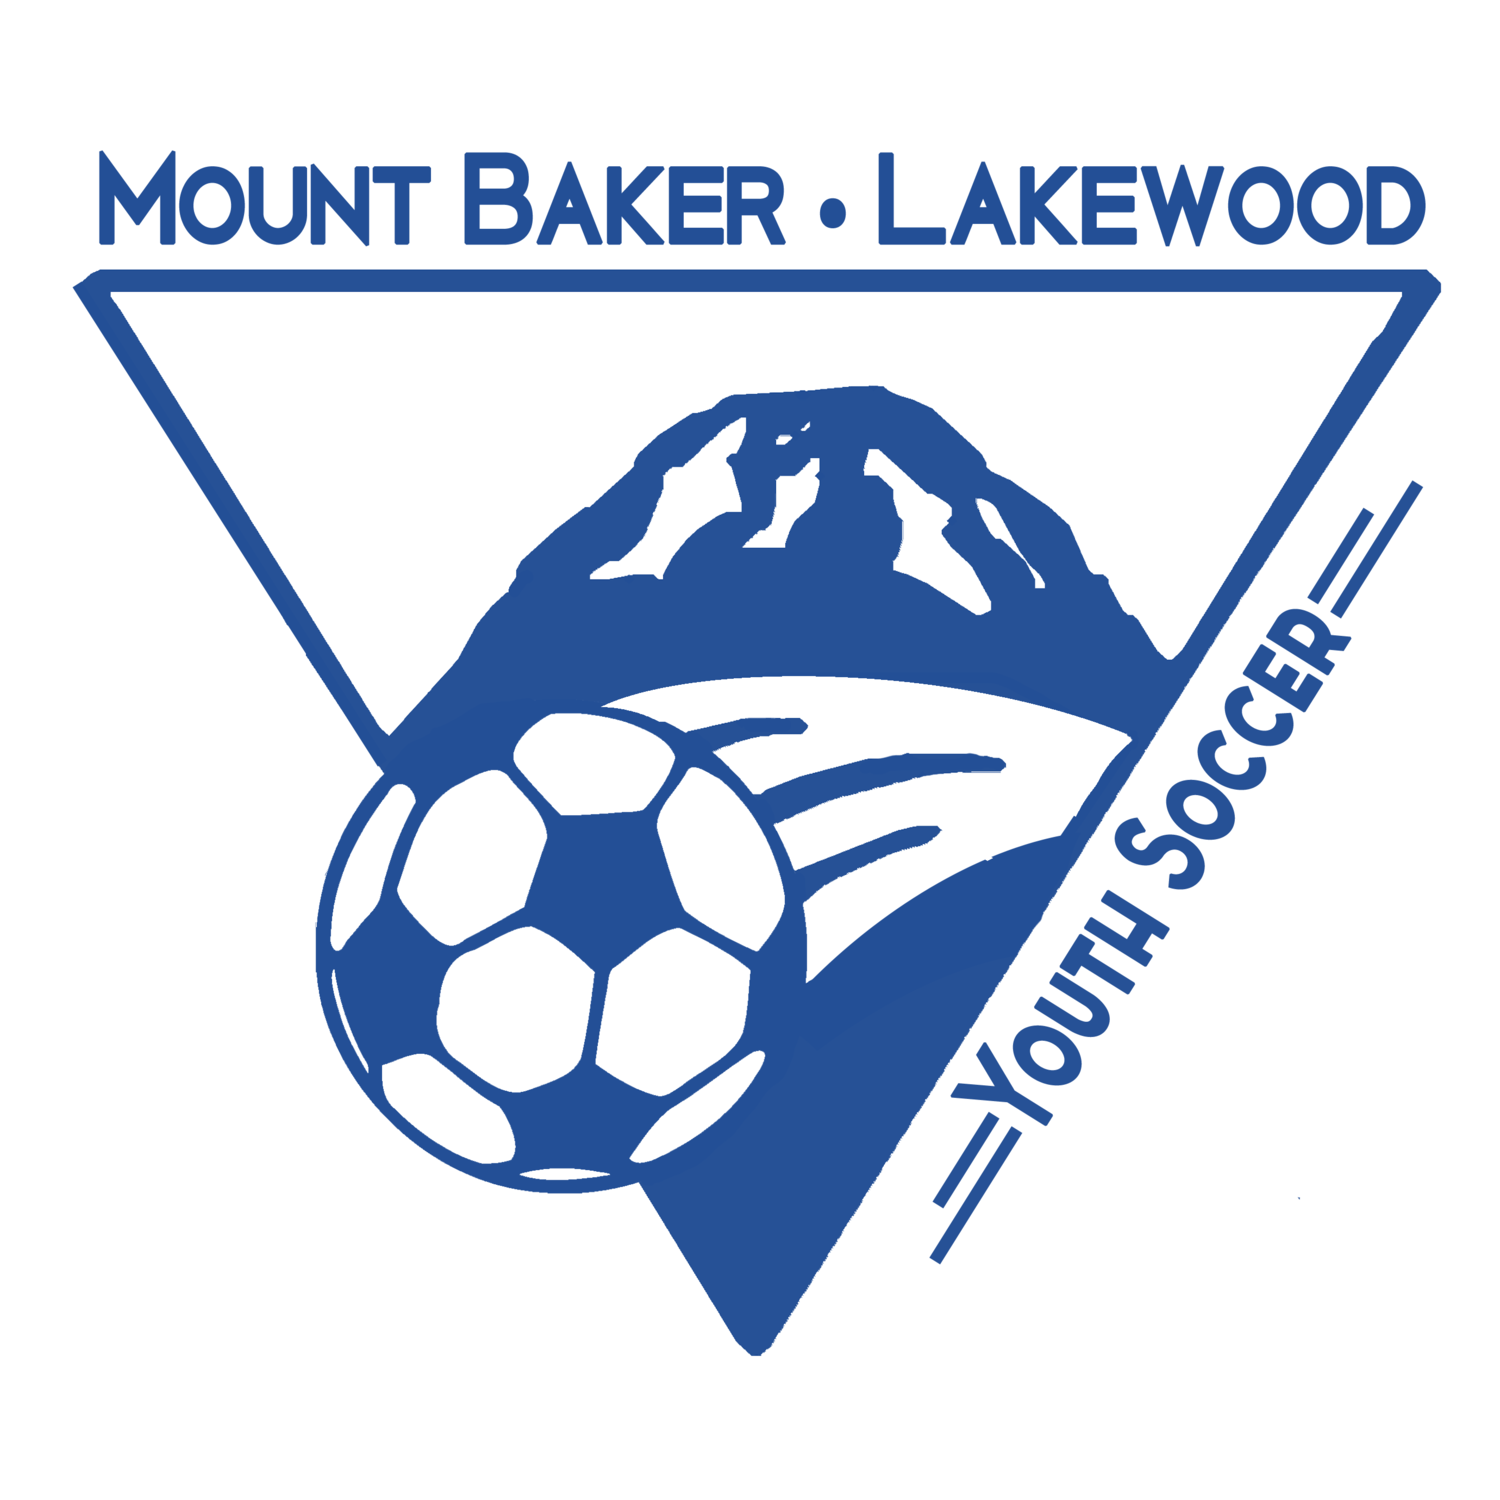 Mount Baker-Lakewood Soccer Club